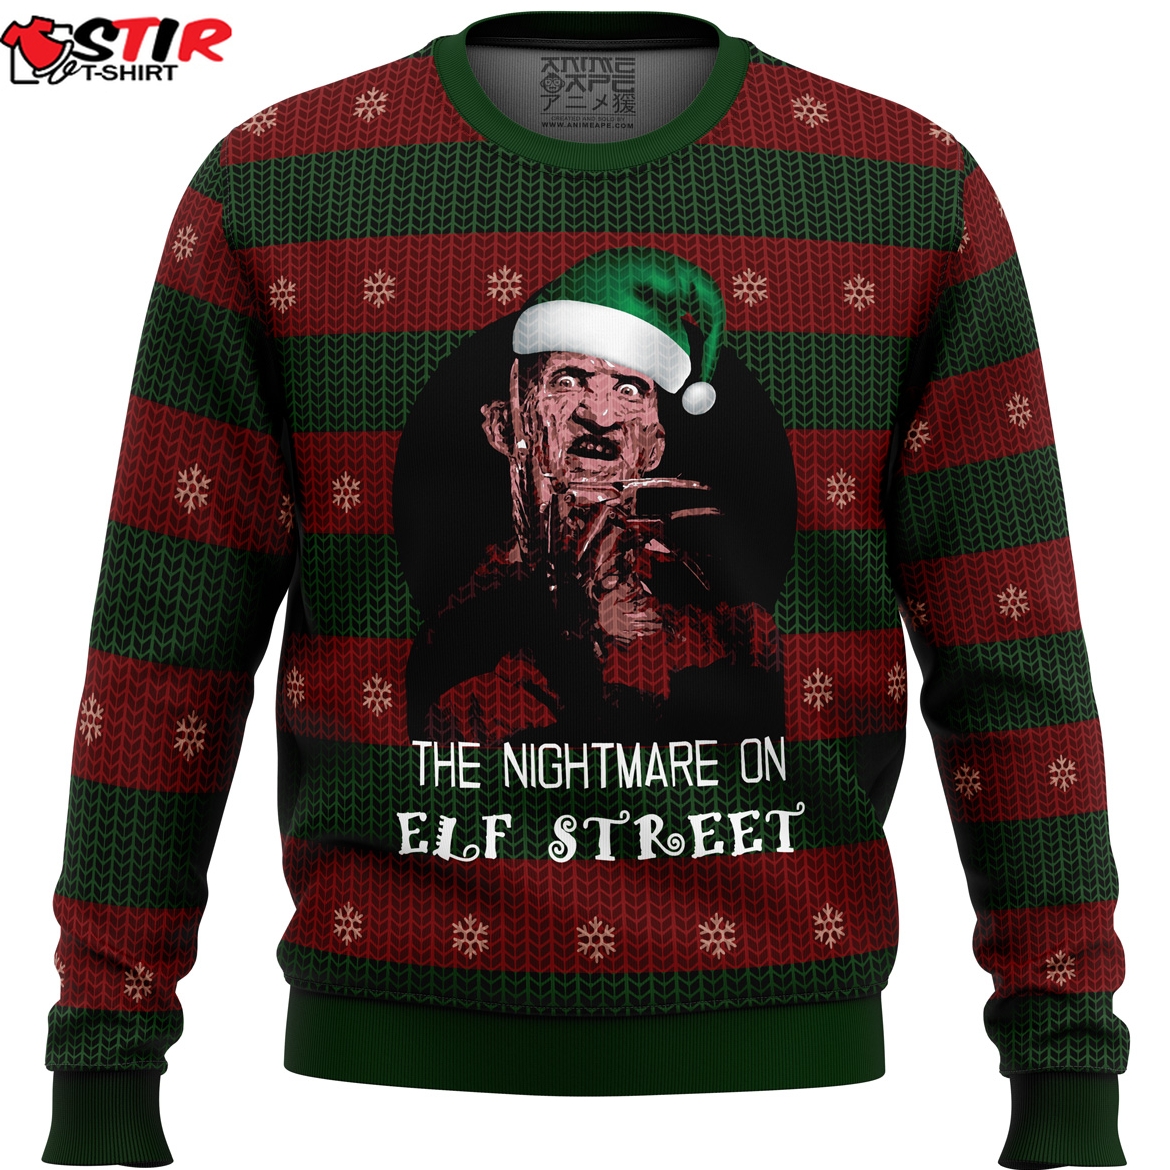 The Nightmare On Elf Street Freddy Krueger Ugly Christmas Sweater Stirtshirt